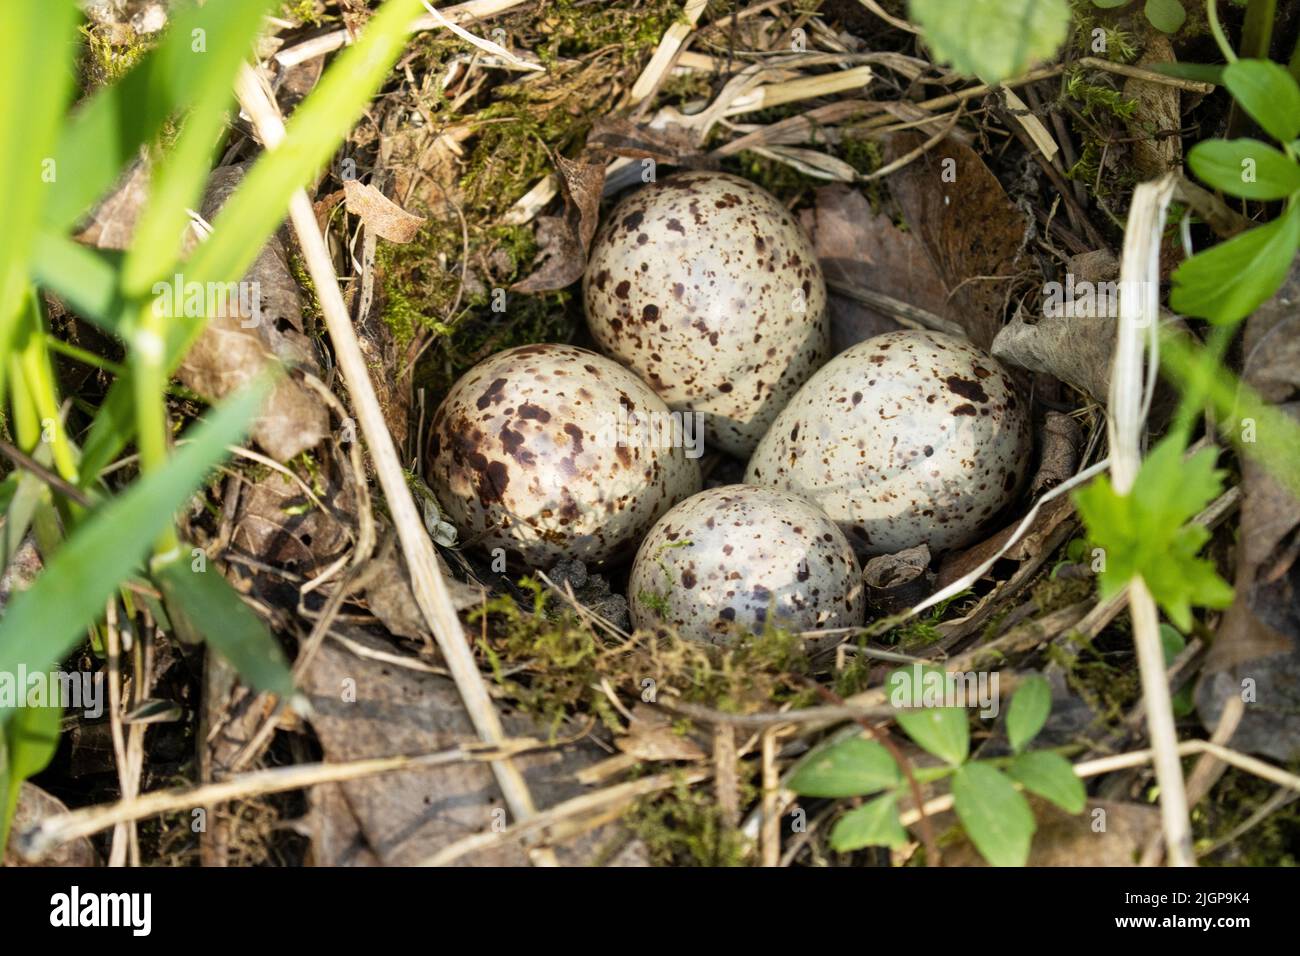 Four Common sandpiper, Actitis hypoleucos eggs in a nest Stock Photo